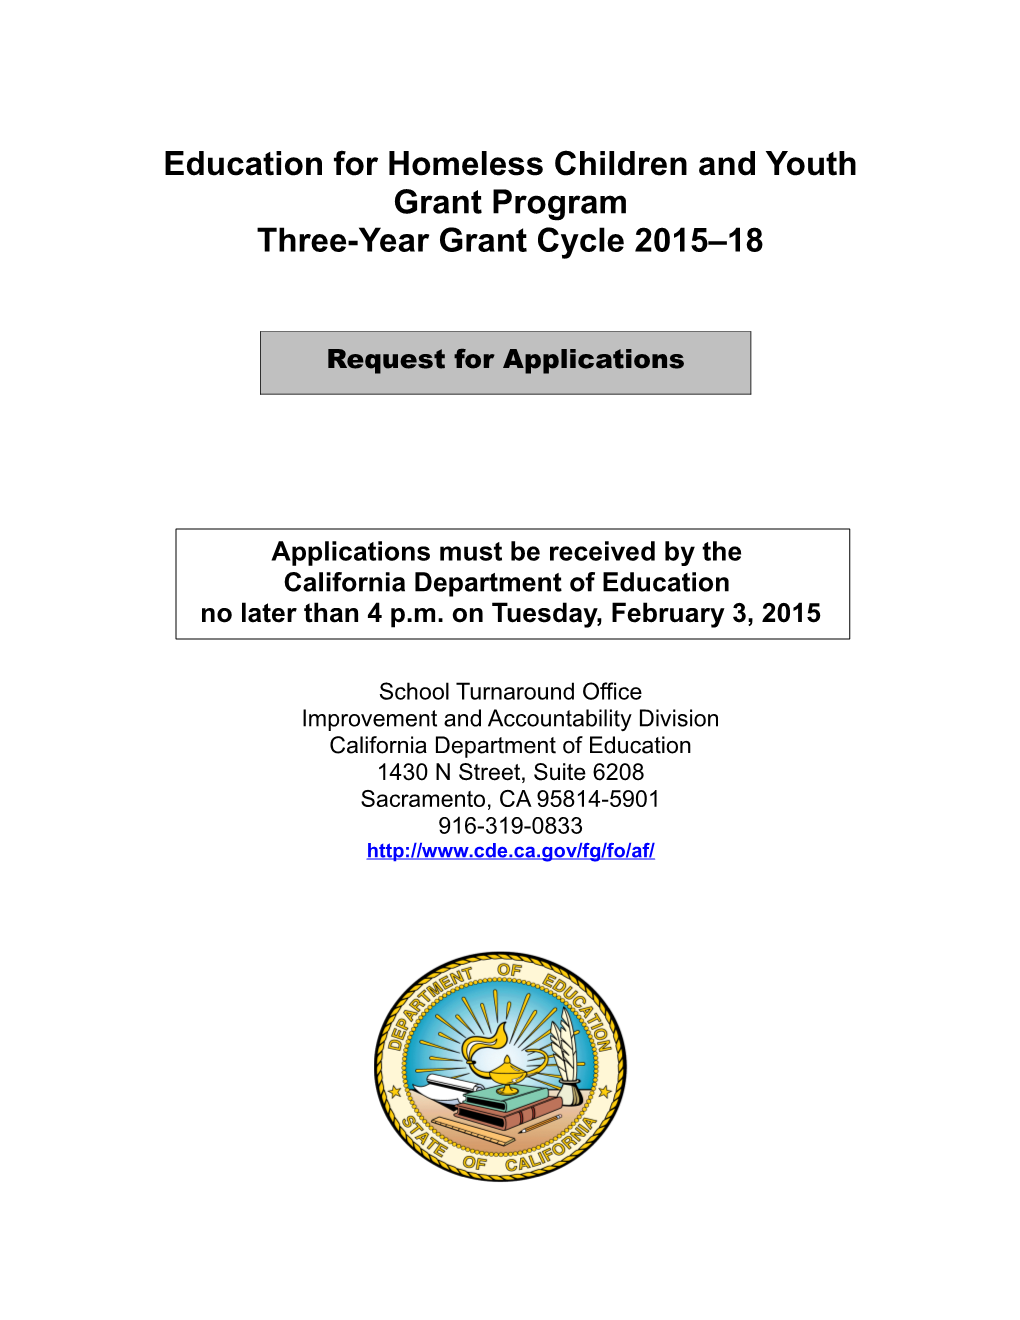 RFA-15: EHCY Program (CA Dept of Education)